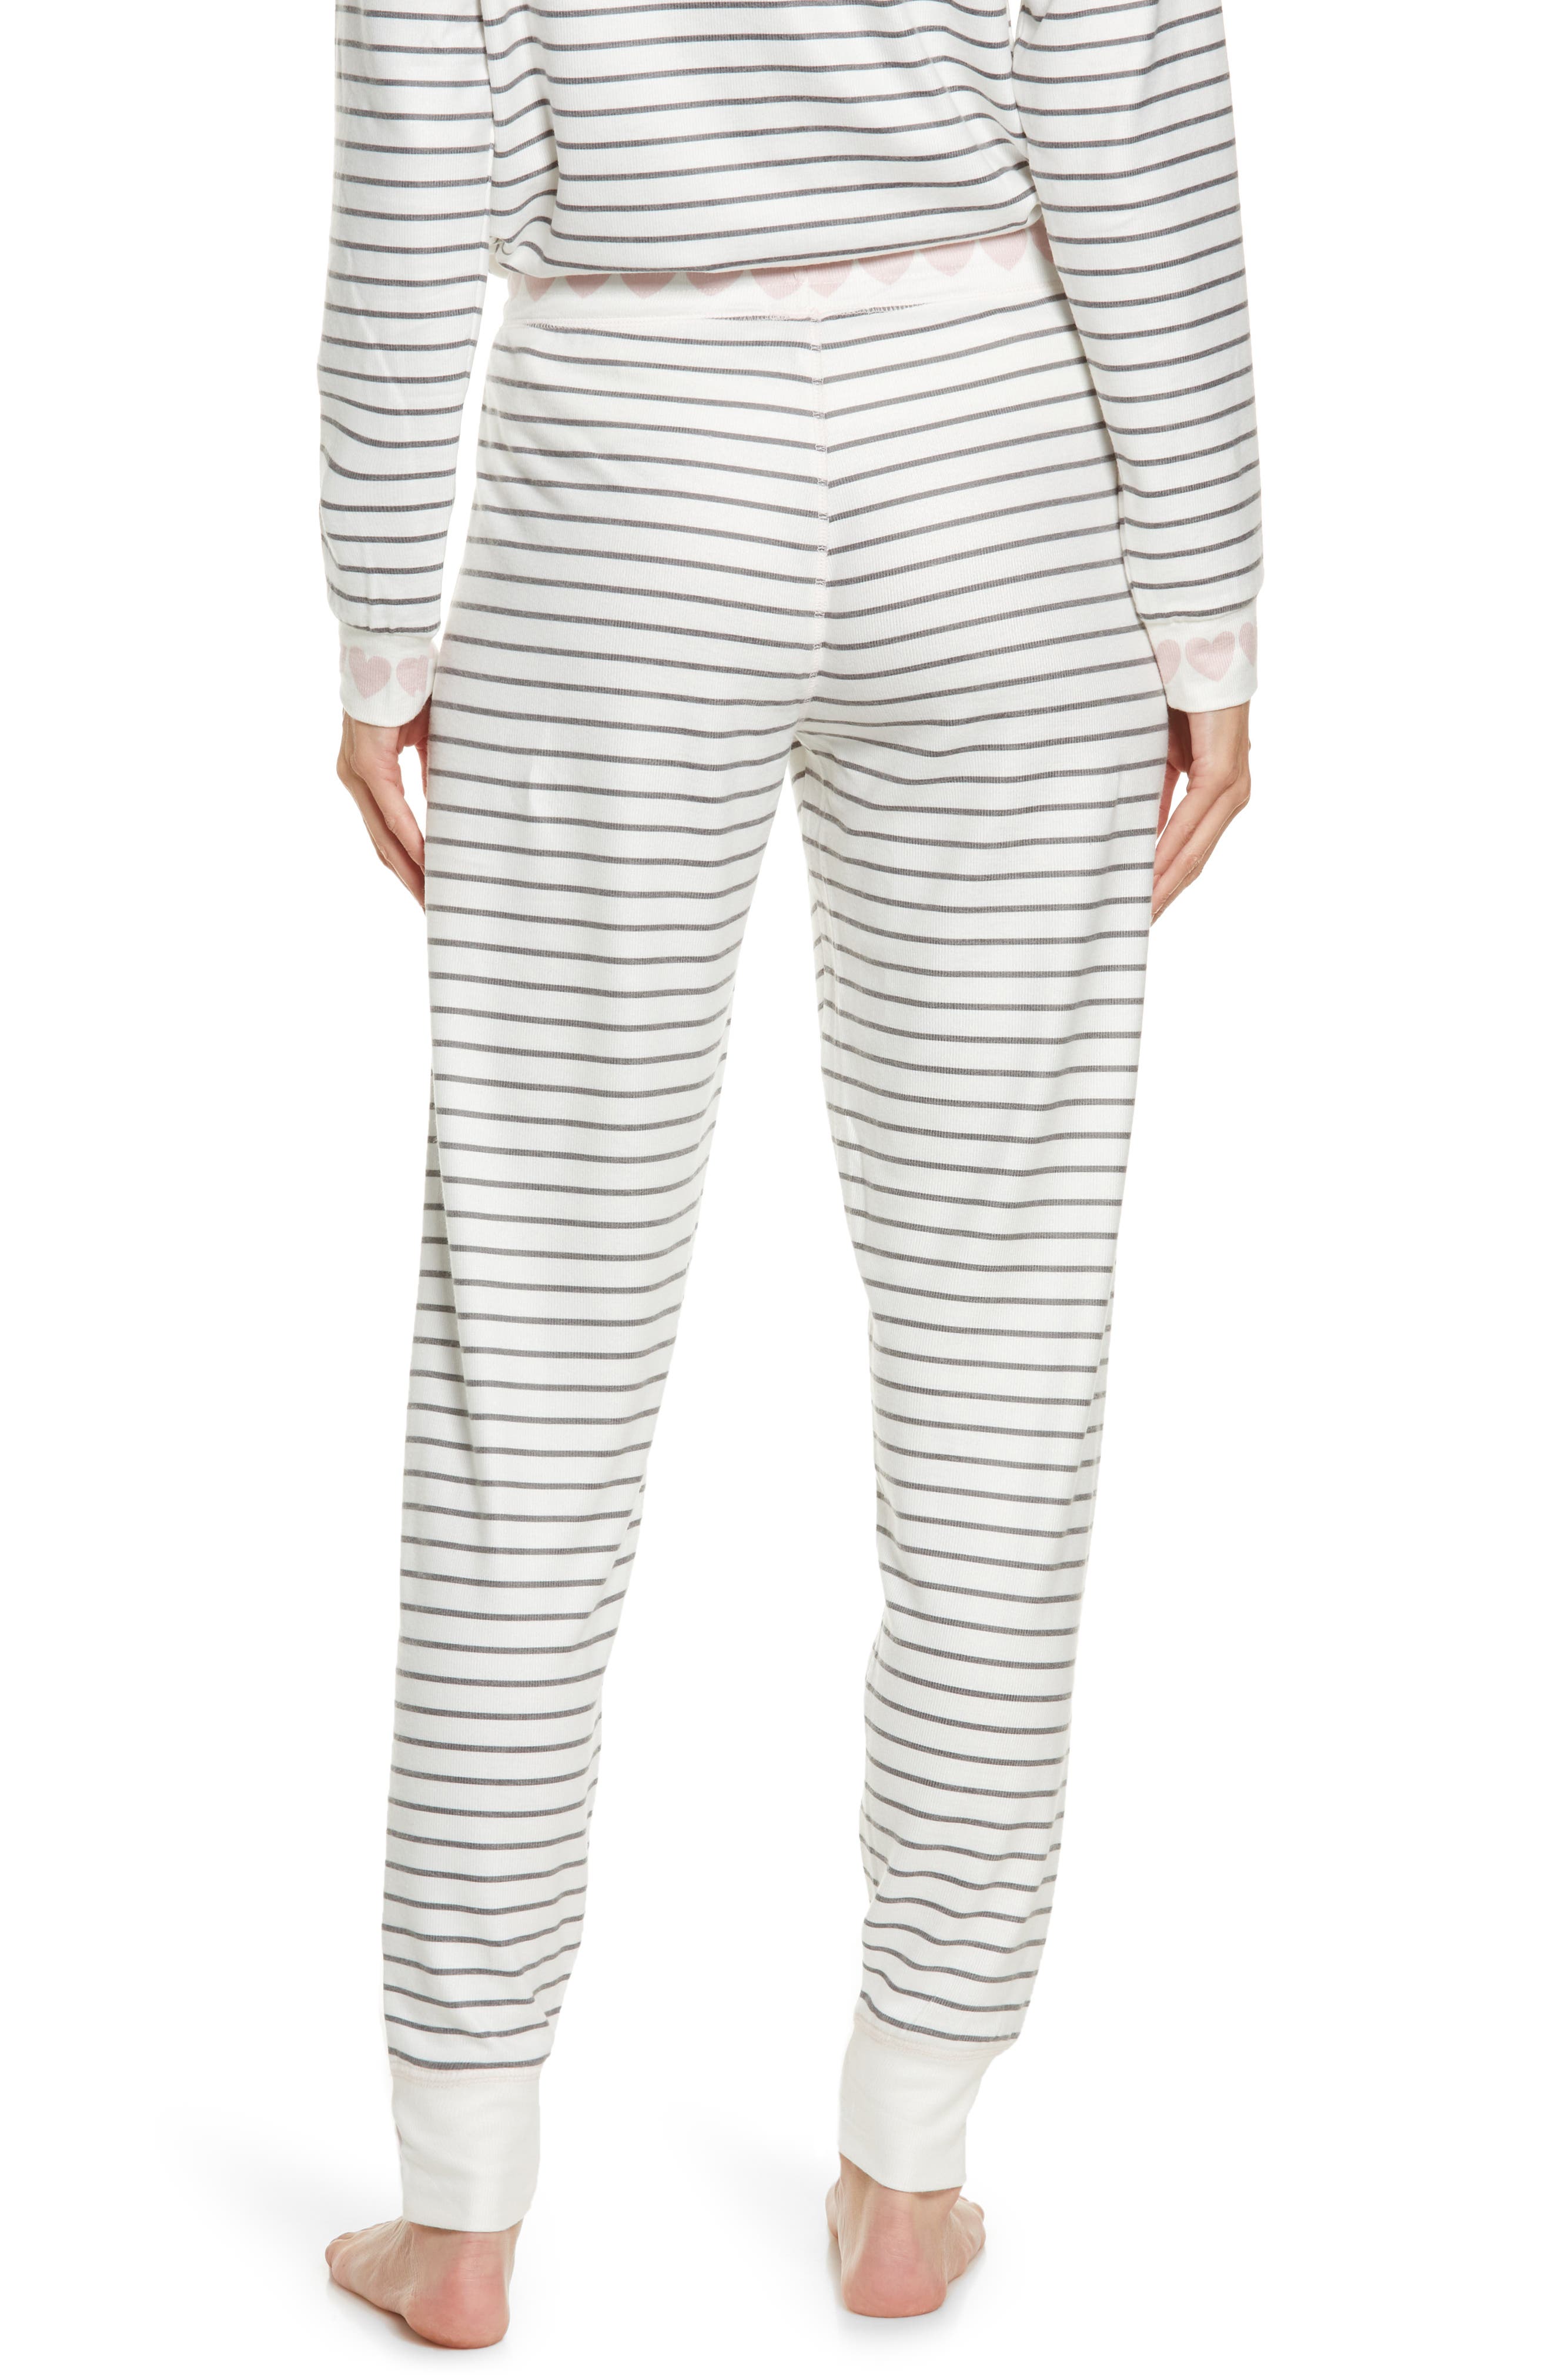 PJ Salvage Vintage Skier Thermal Pajama Pants